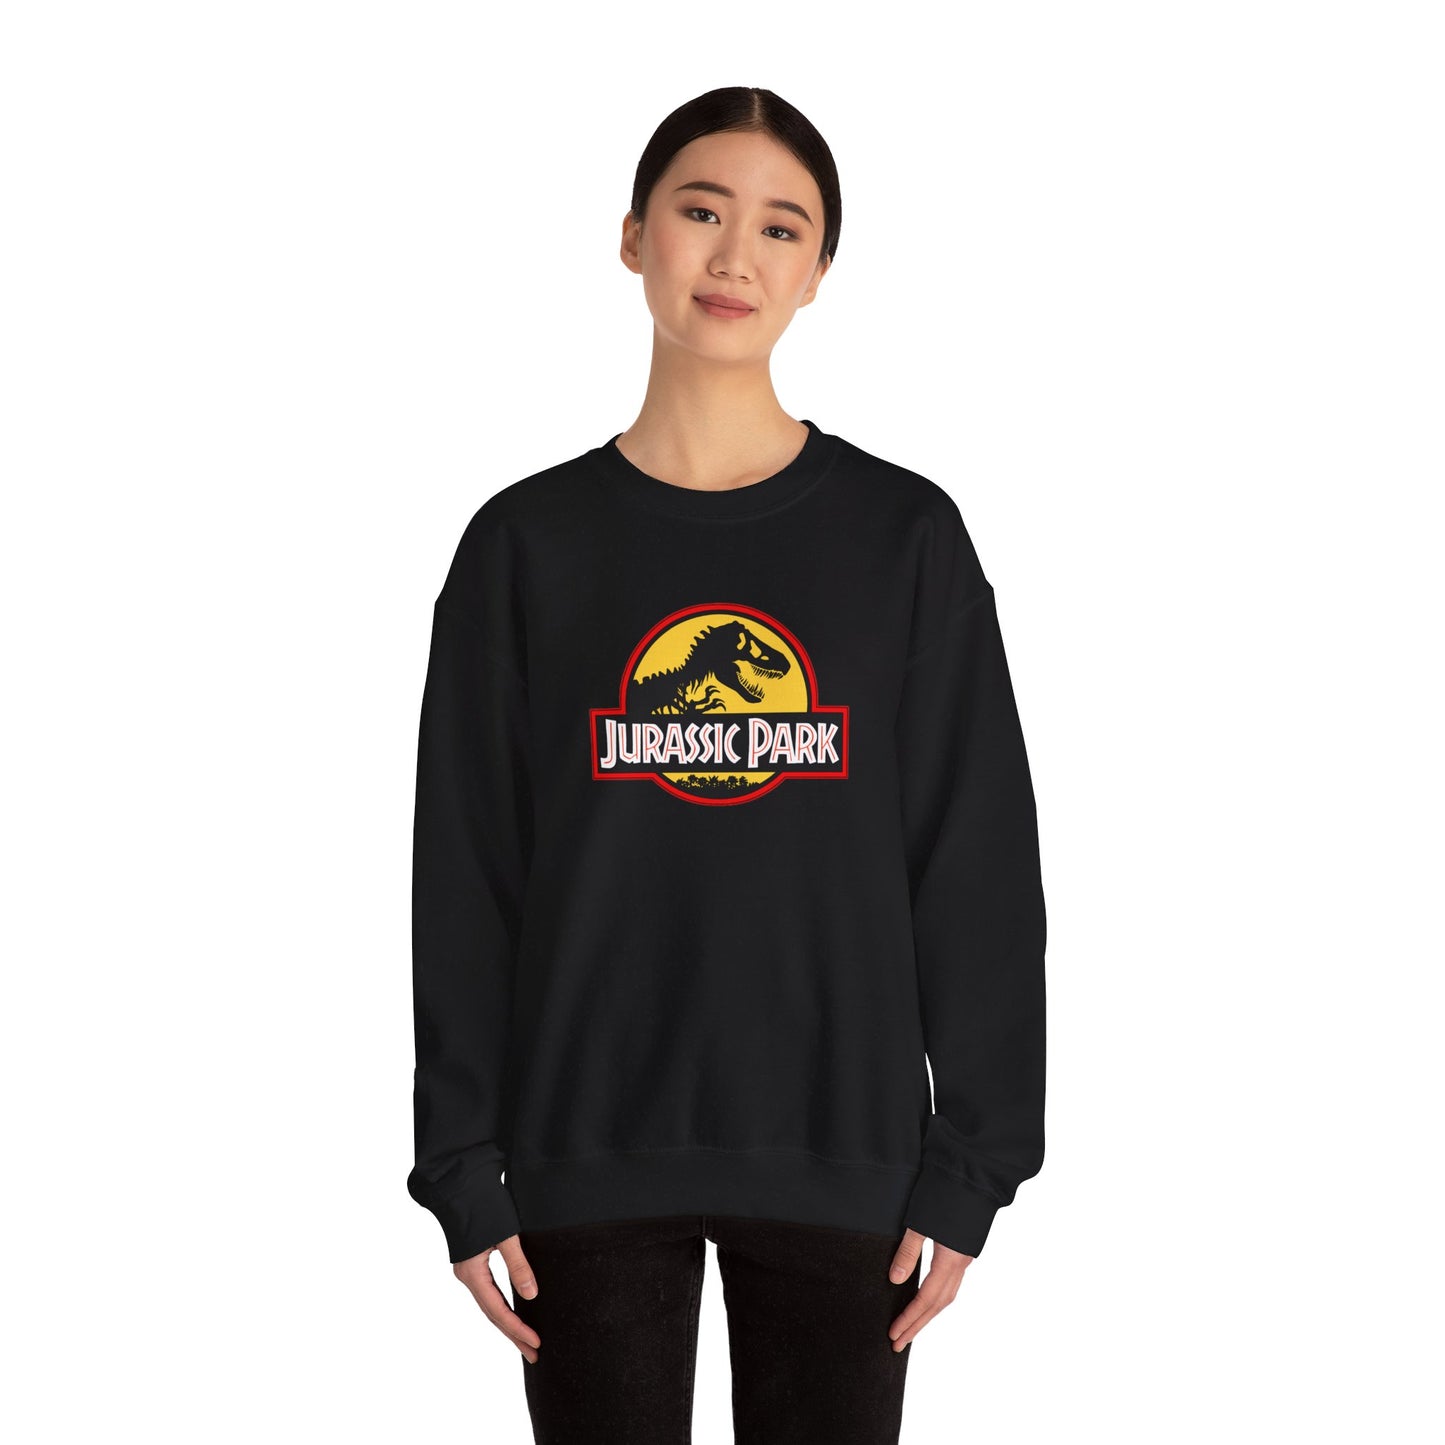 Jurassic Park Sweatshirt